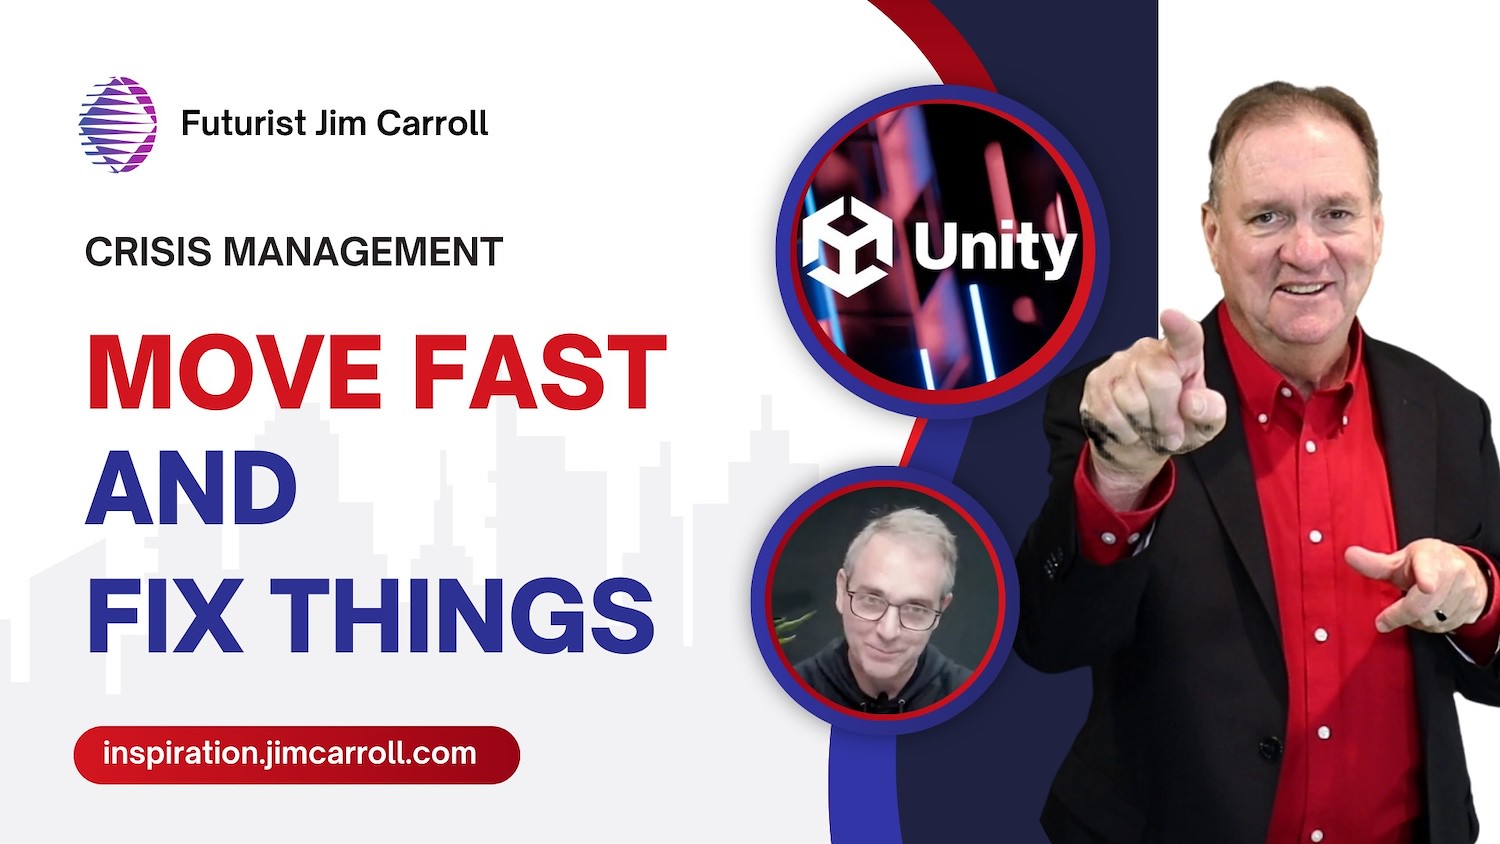 "Move fast and fix things" - Futurist Jim Carroll